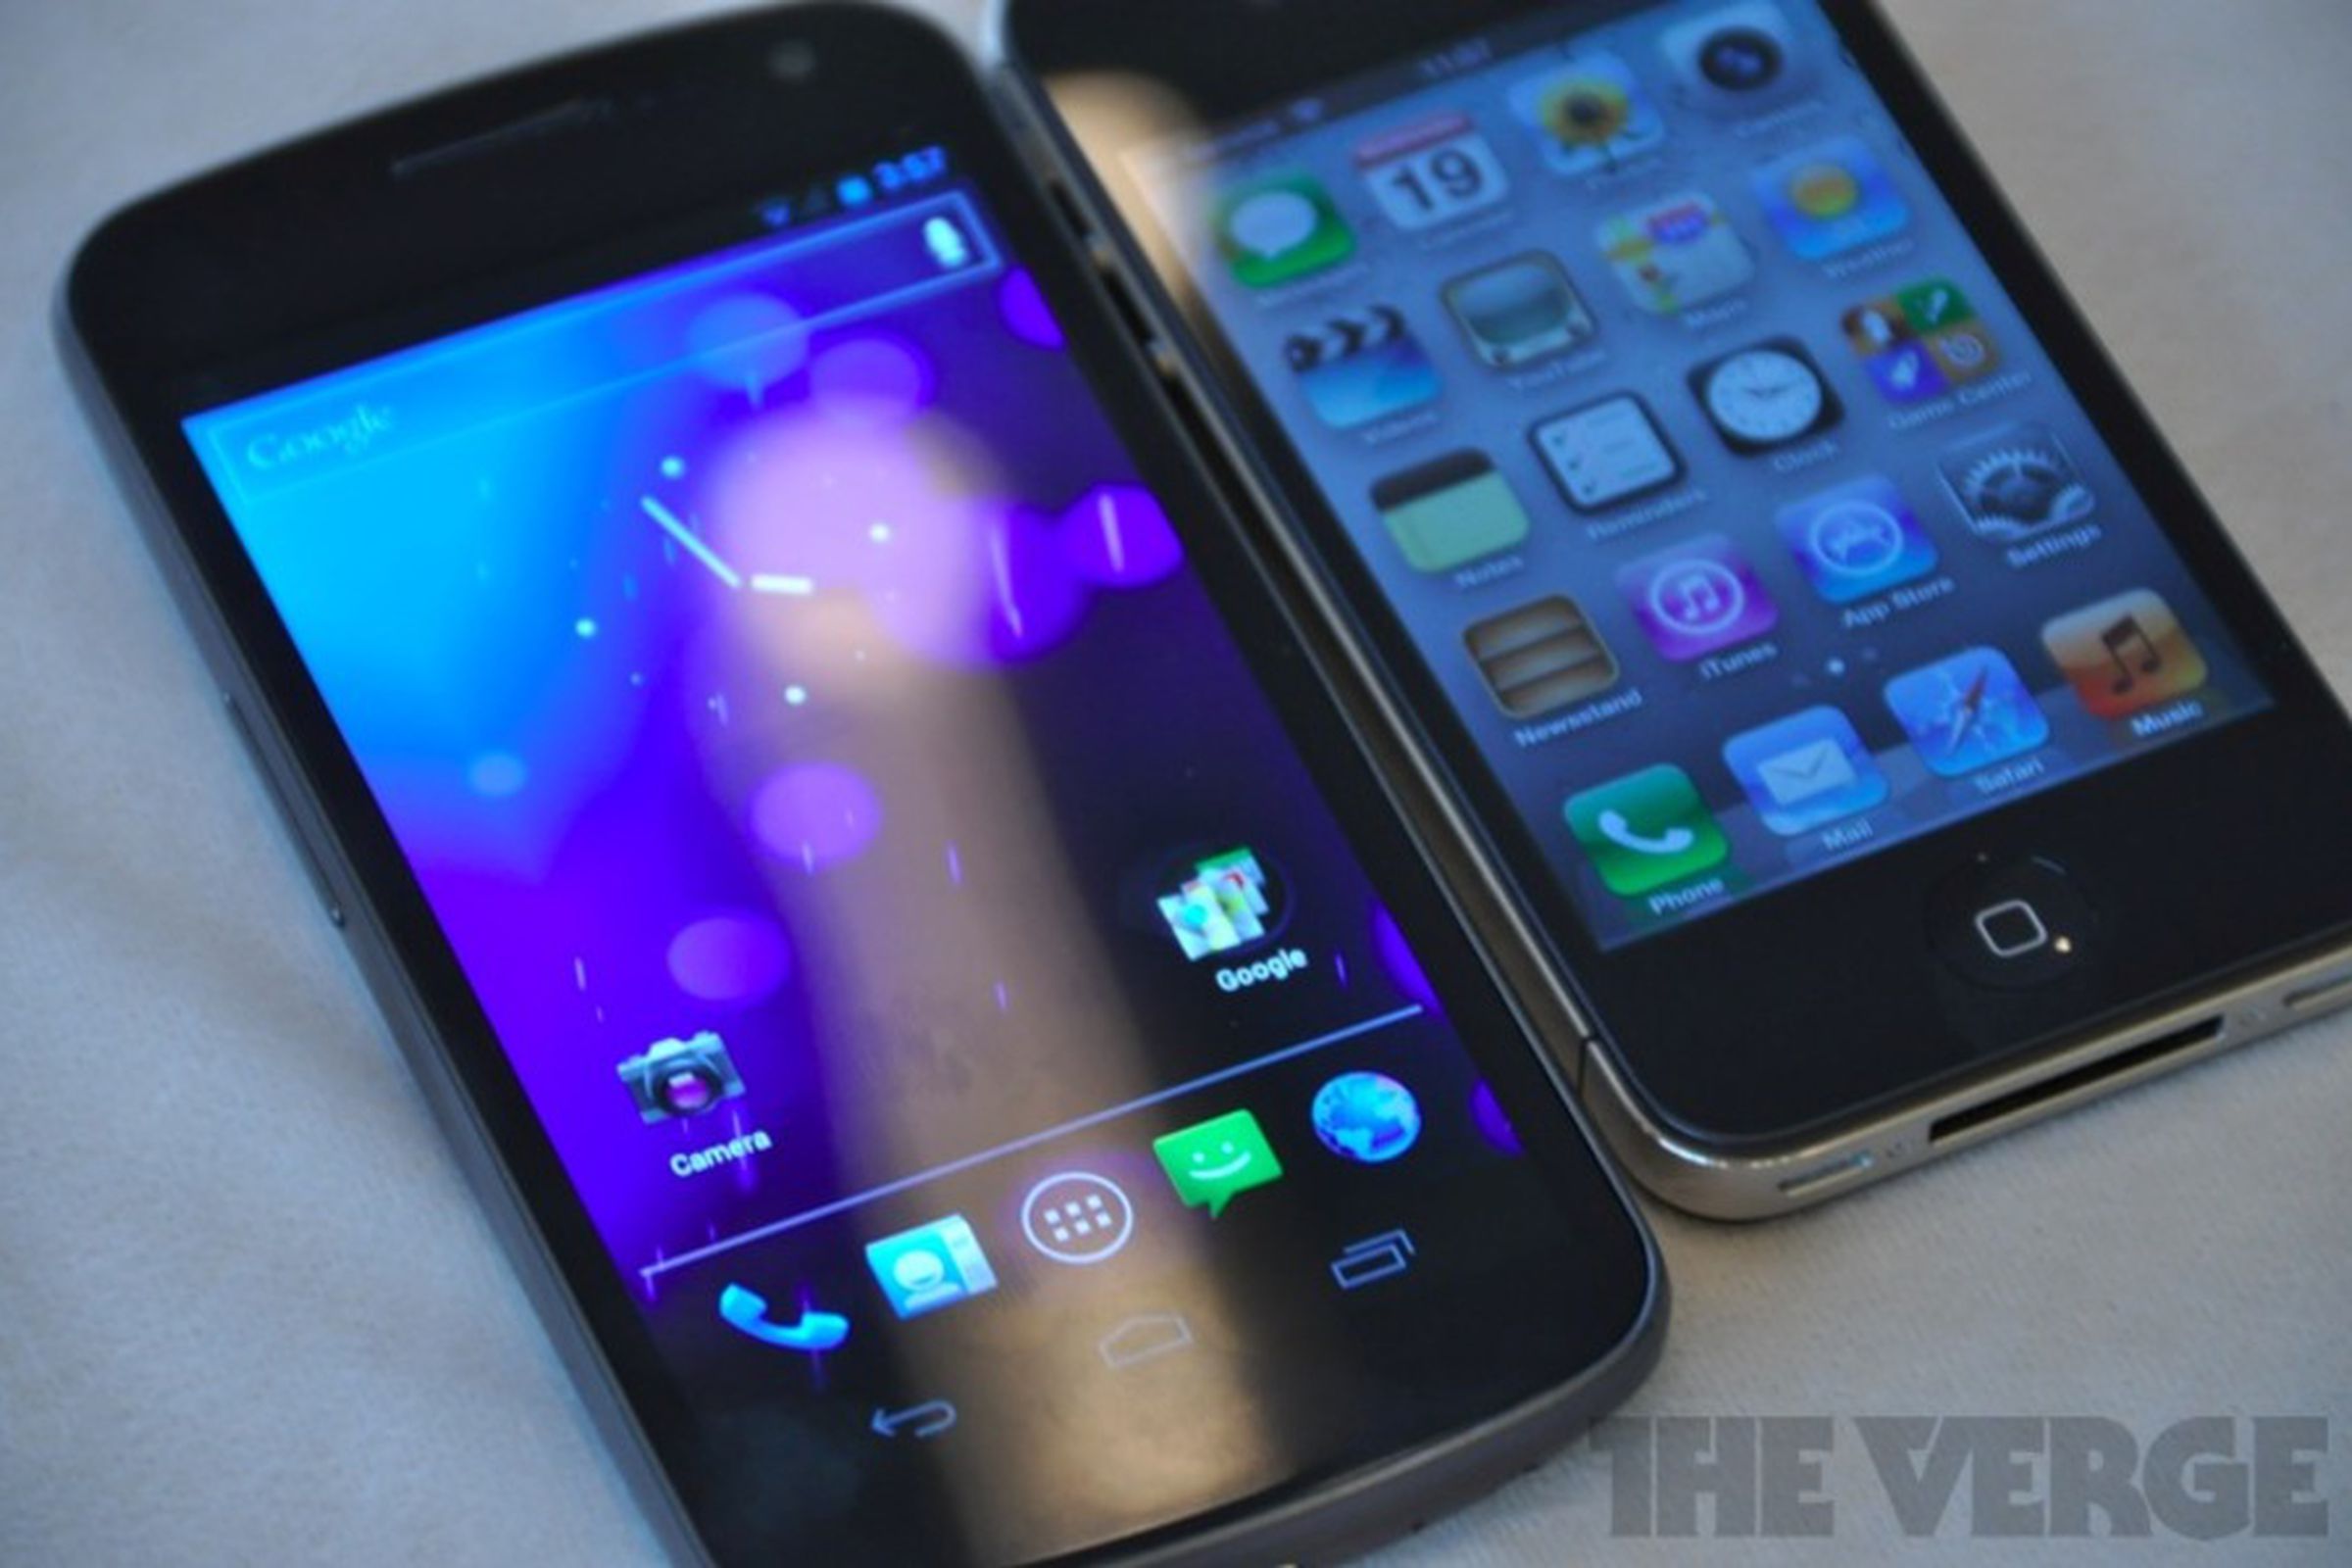 Galaxy Nexus iPhone comparison